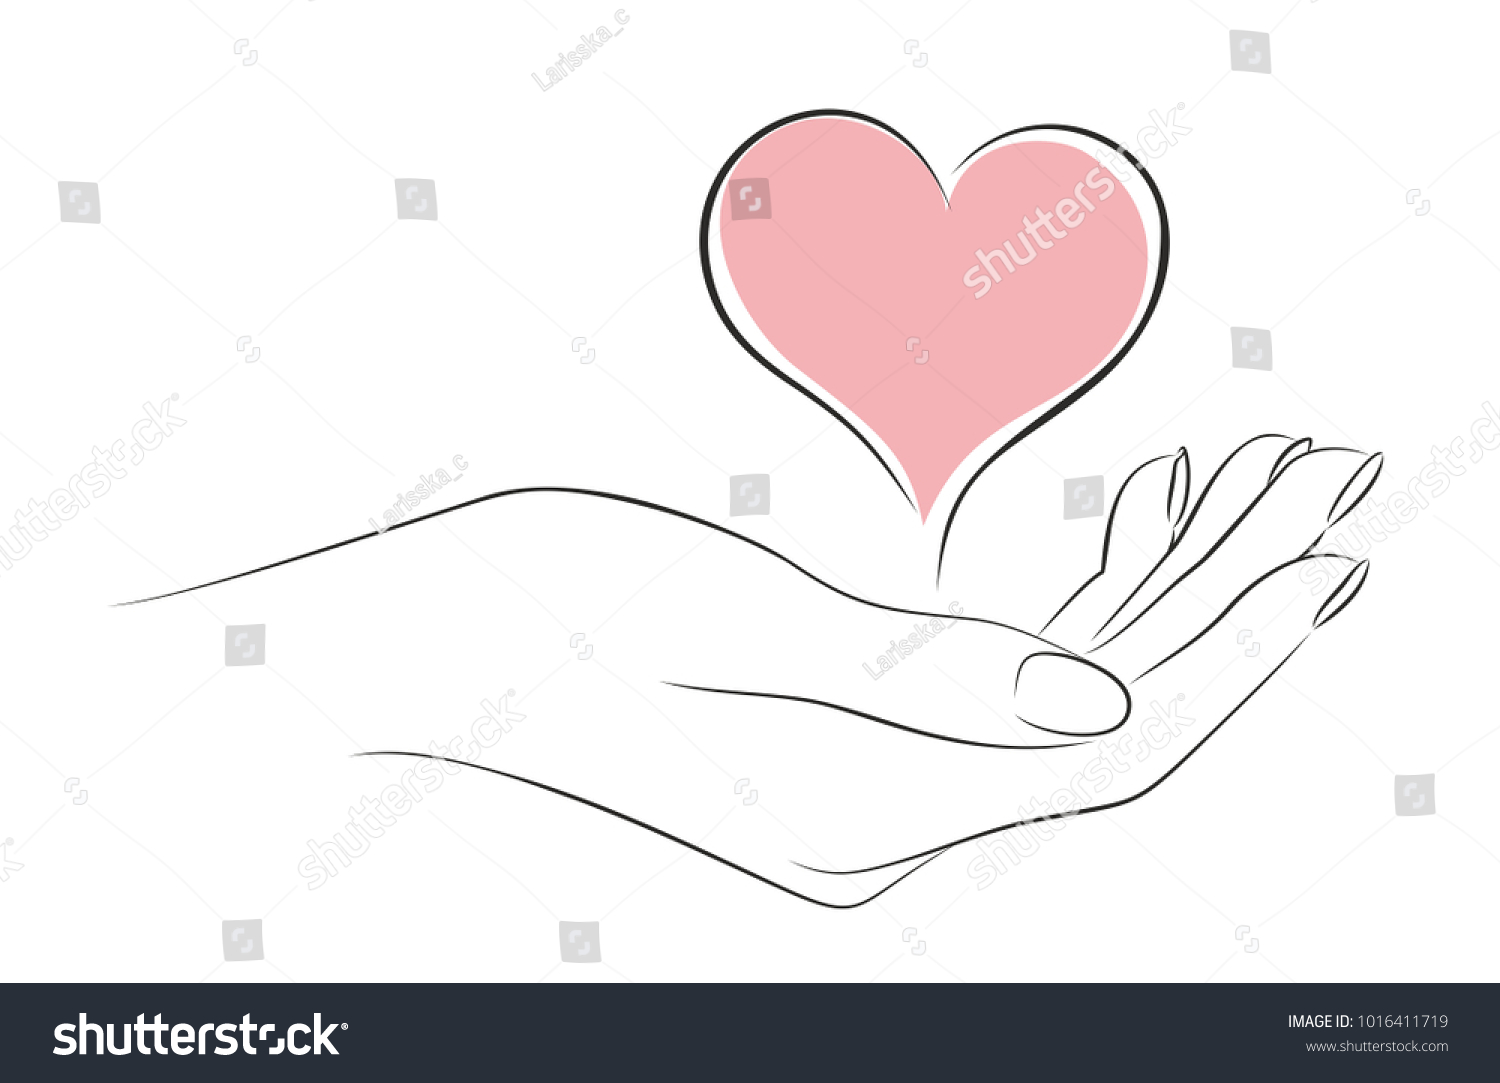 Рисунок руки с сердцем